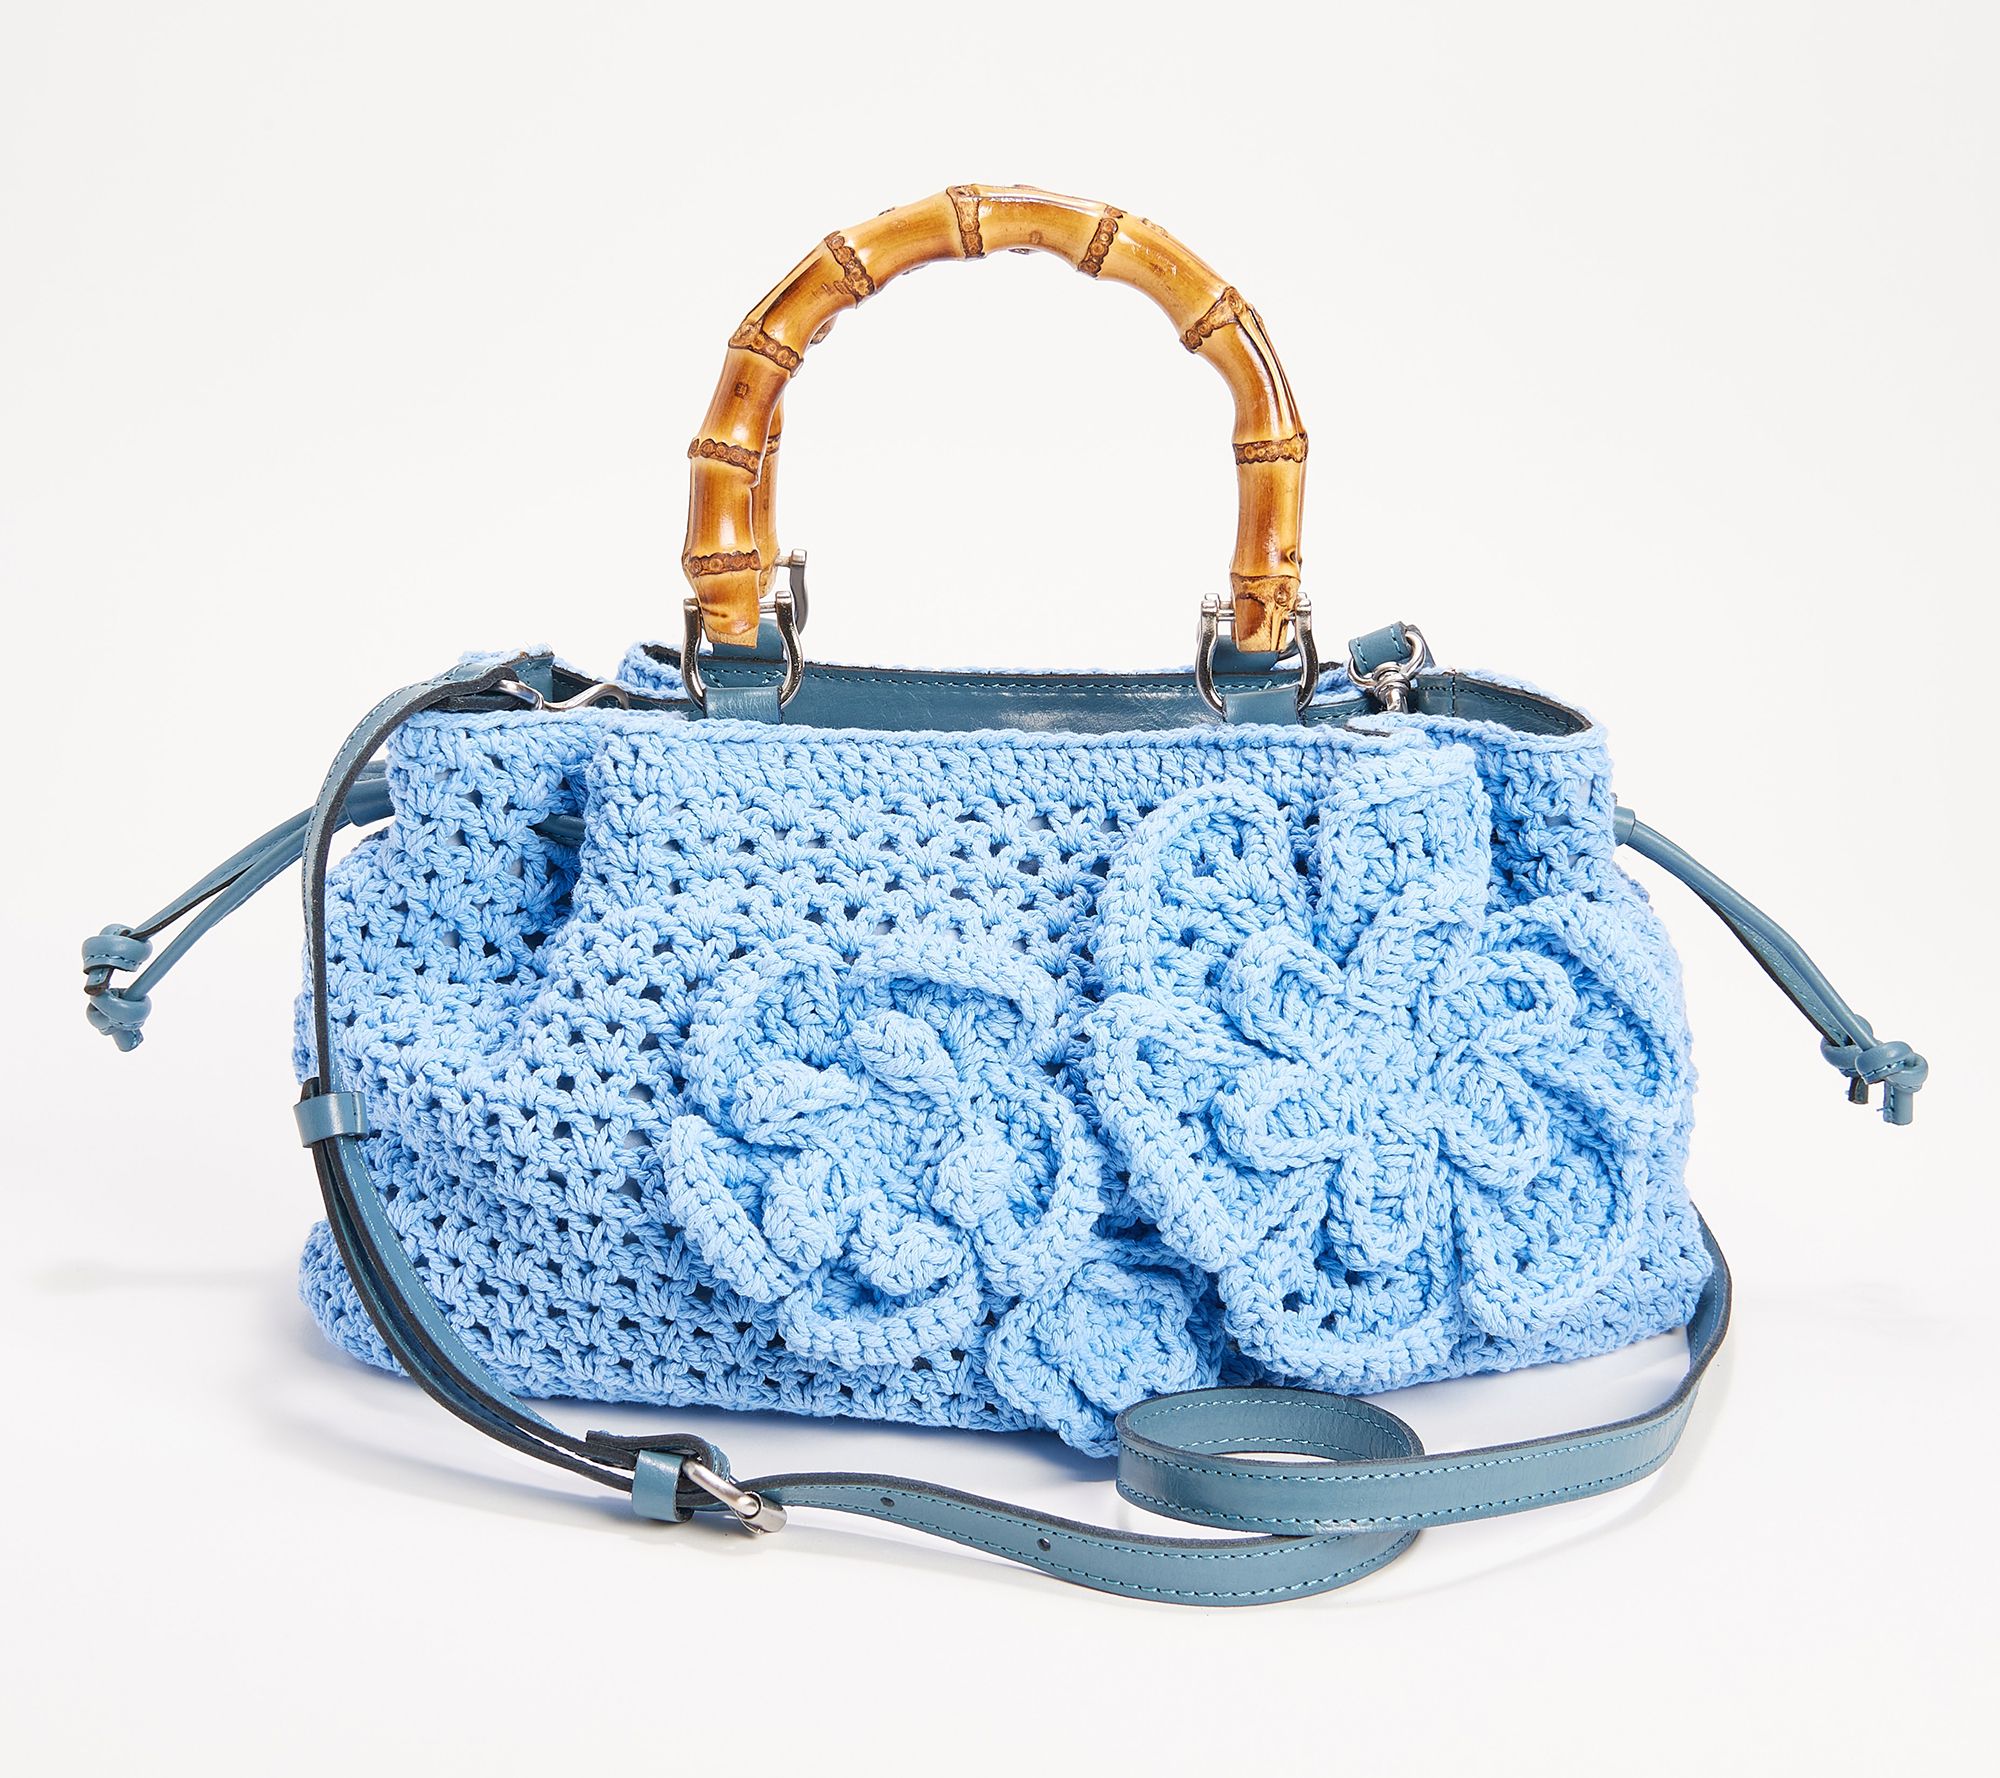 Sweet Nothings Crochet: STUNNING BEADED CLUTCH PURSE